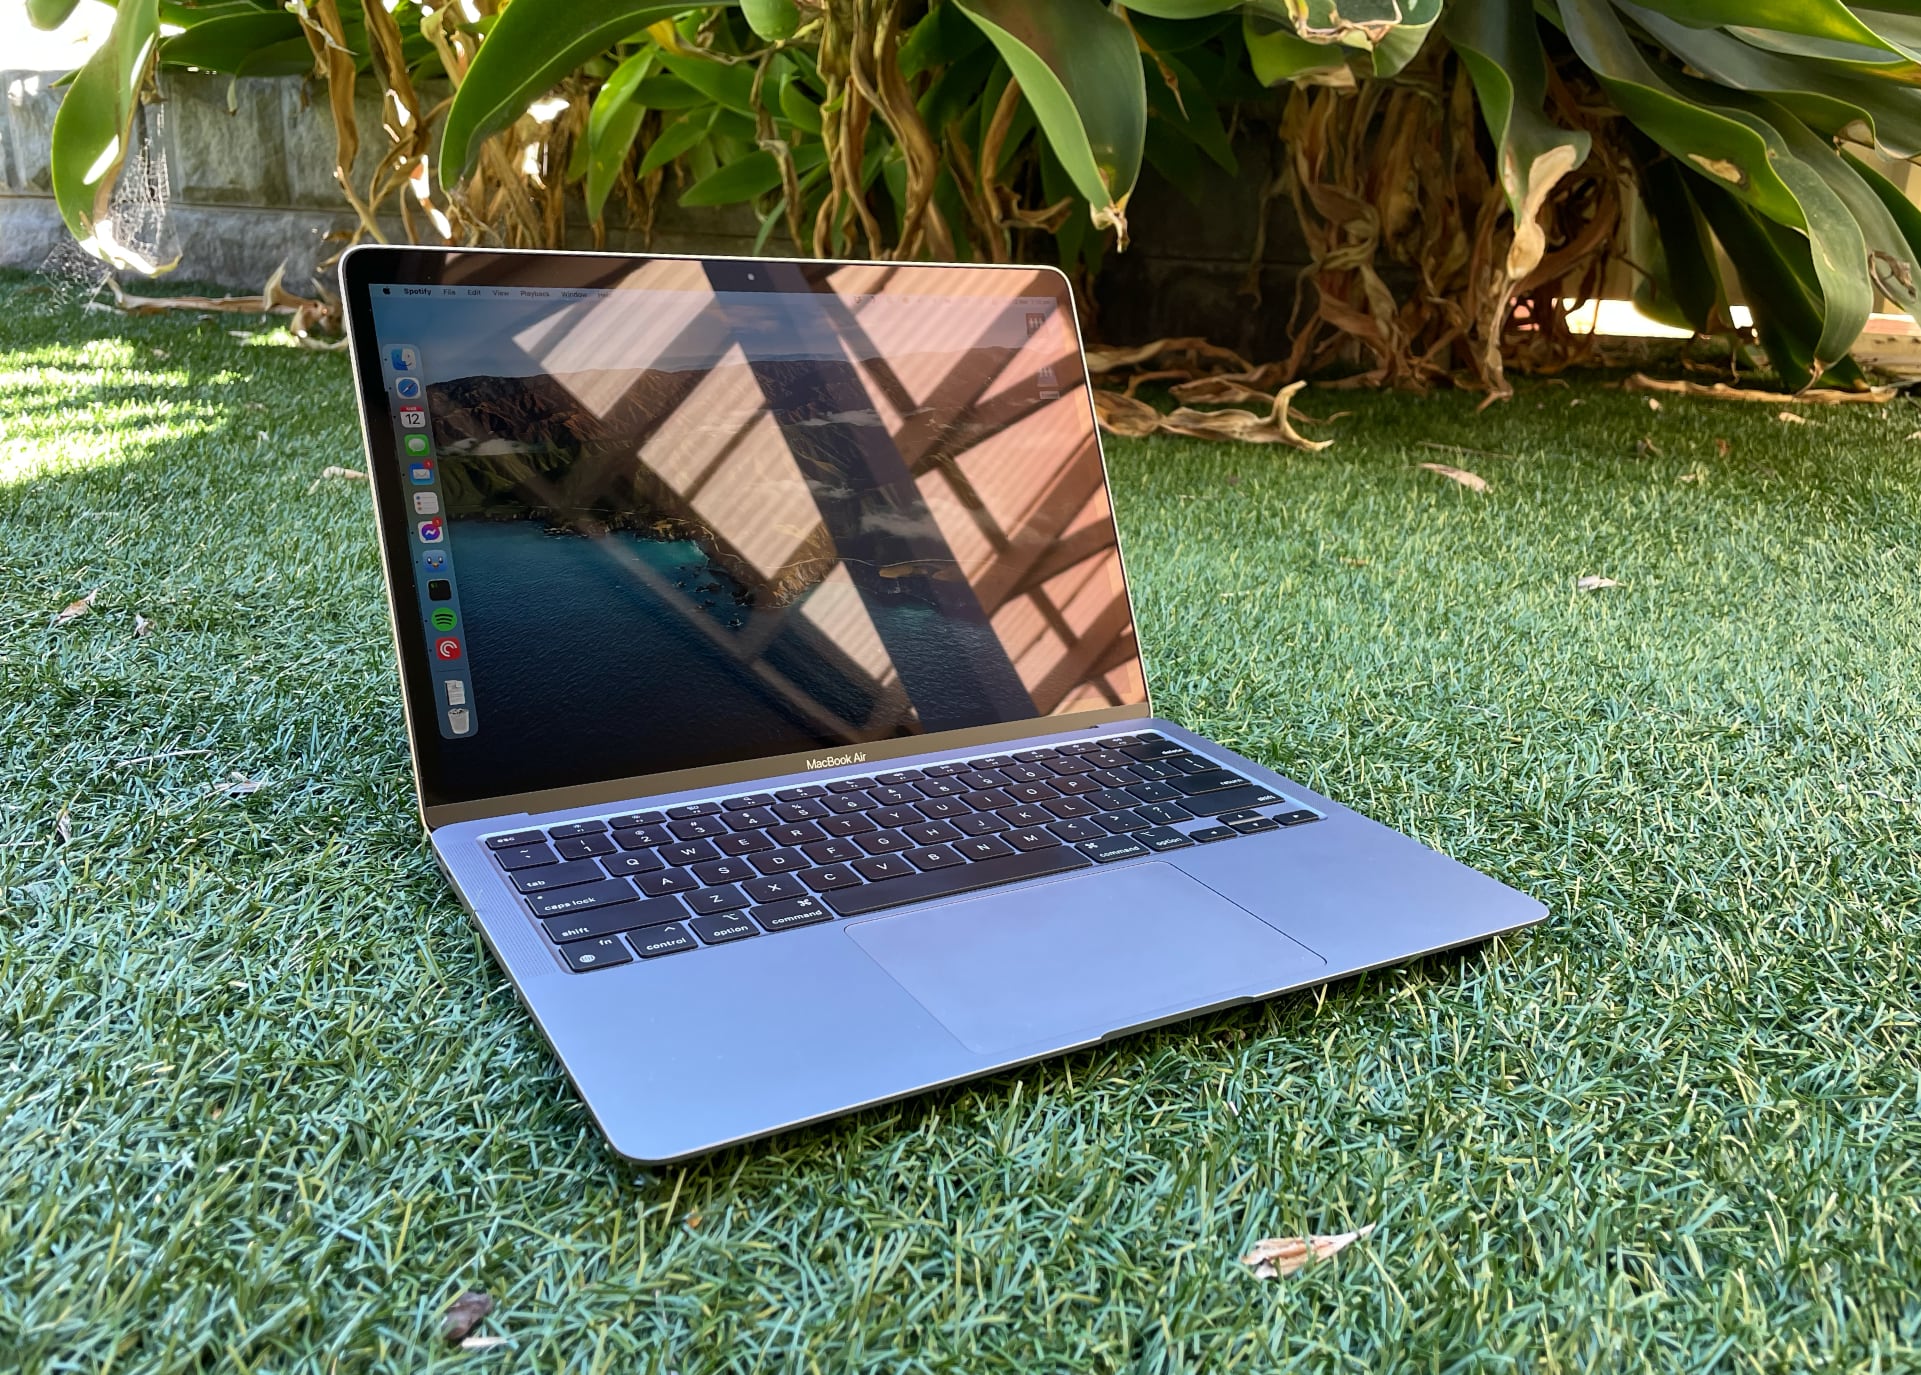 MacBook Air in some grass